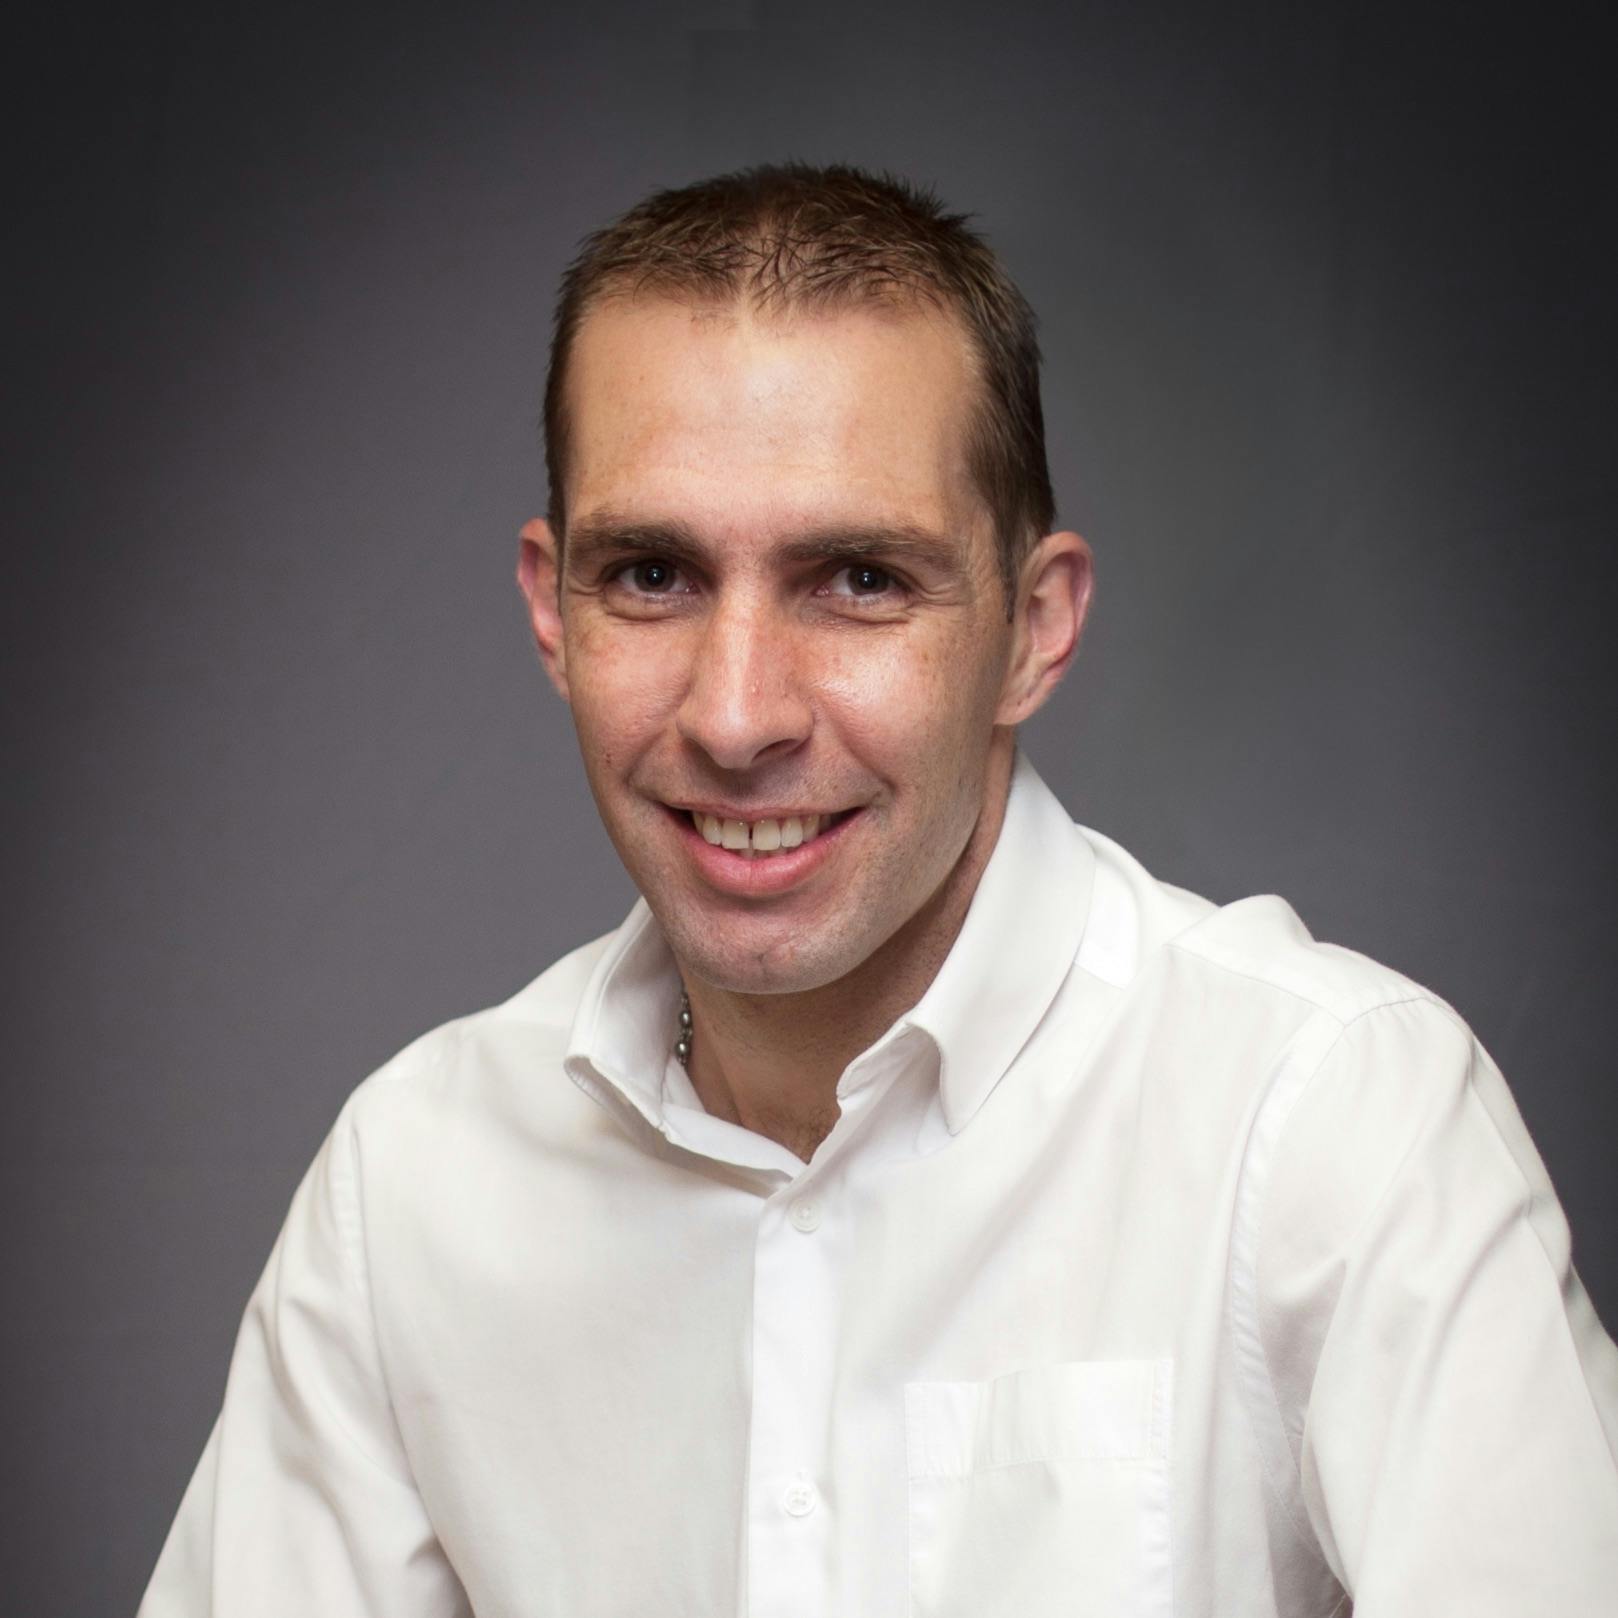 featured image - Meet John Jardin - #Noonies2021 Nominee, Full Stack Developer, CEO of Agilit-e